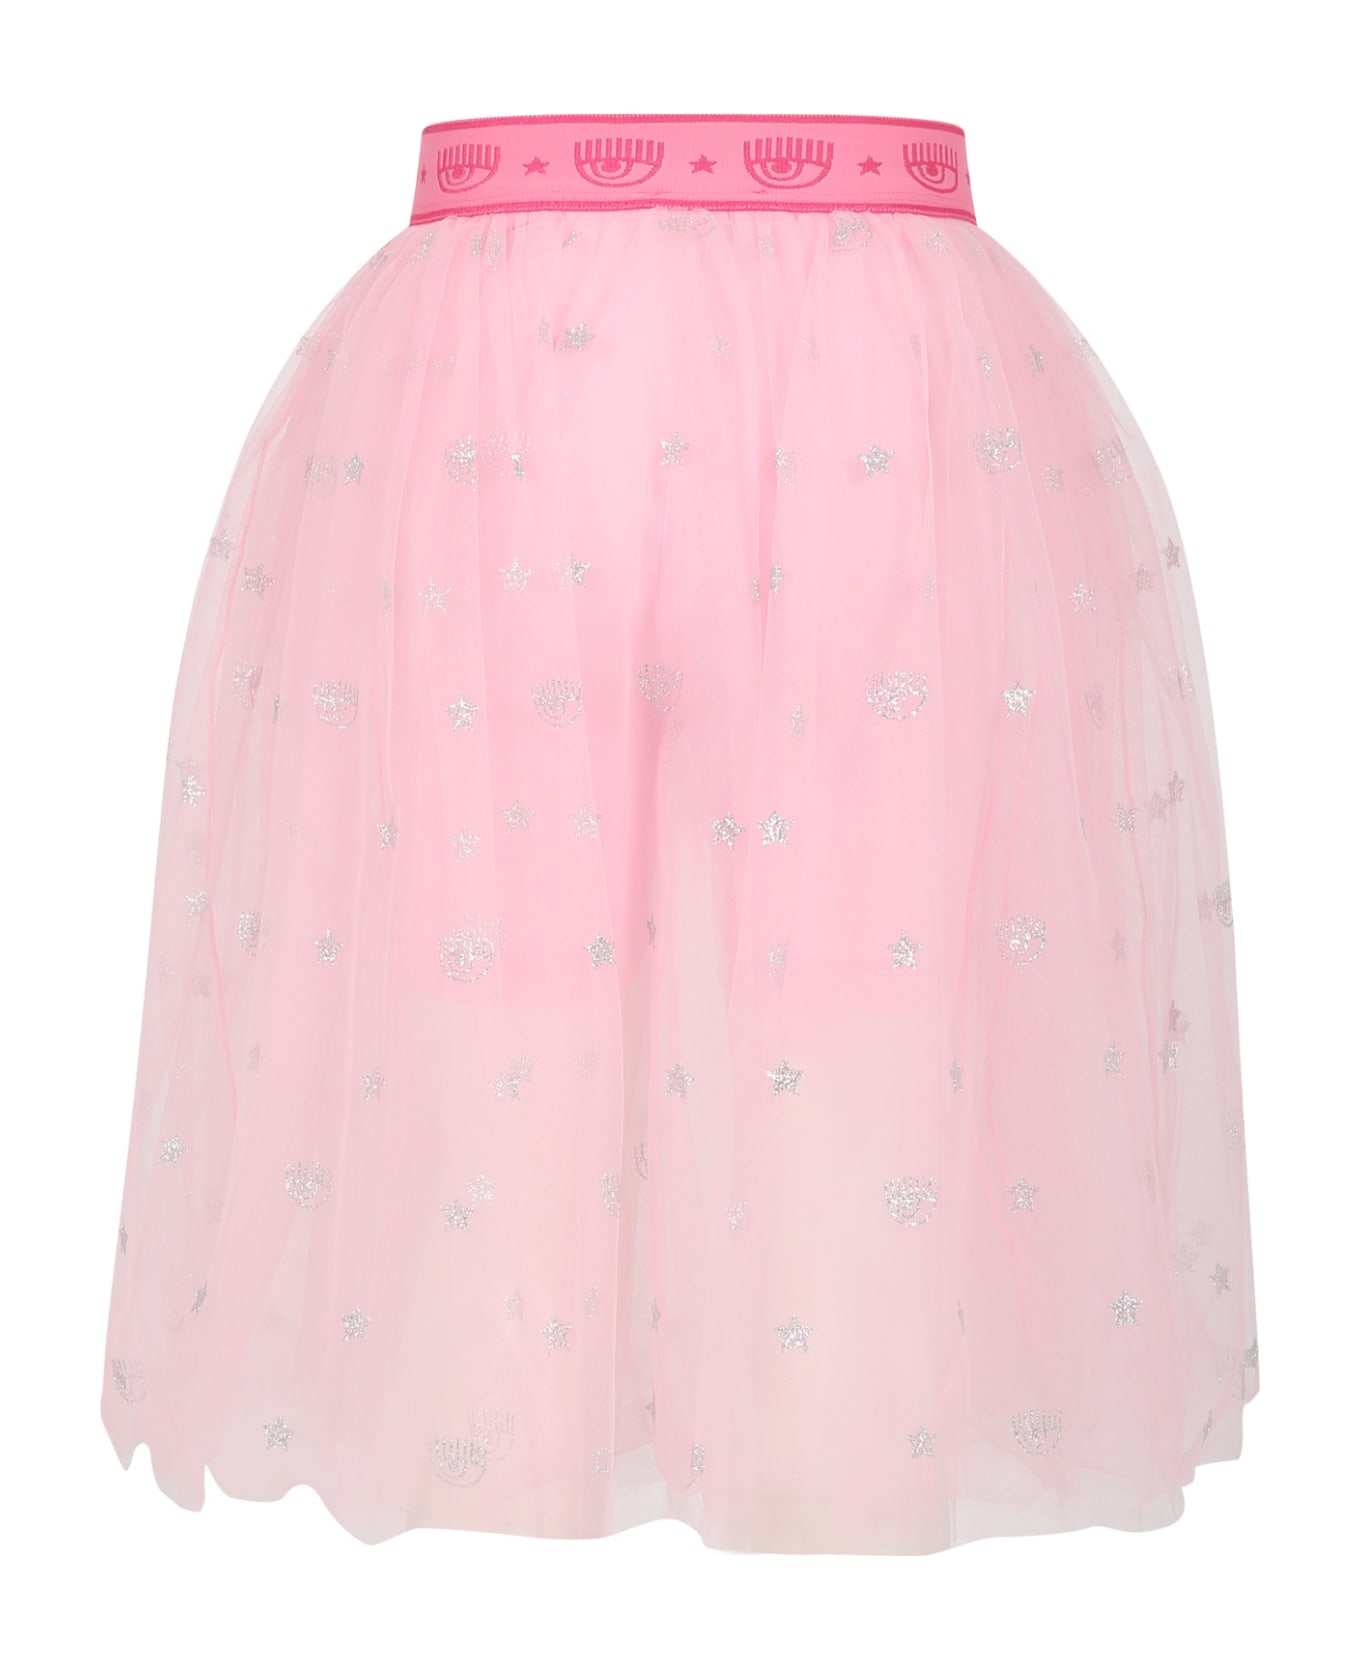 Chiara Ferragni Pink Skirt For Girl With Winks - Pink